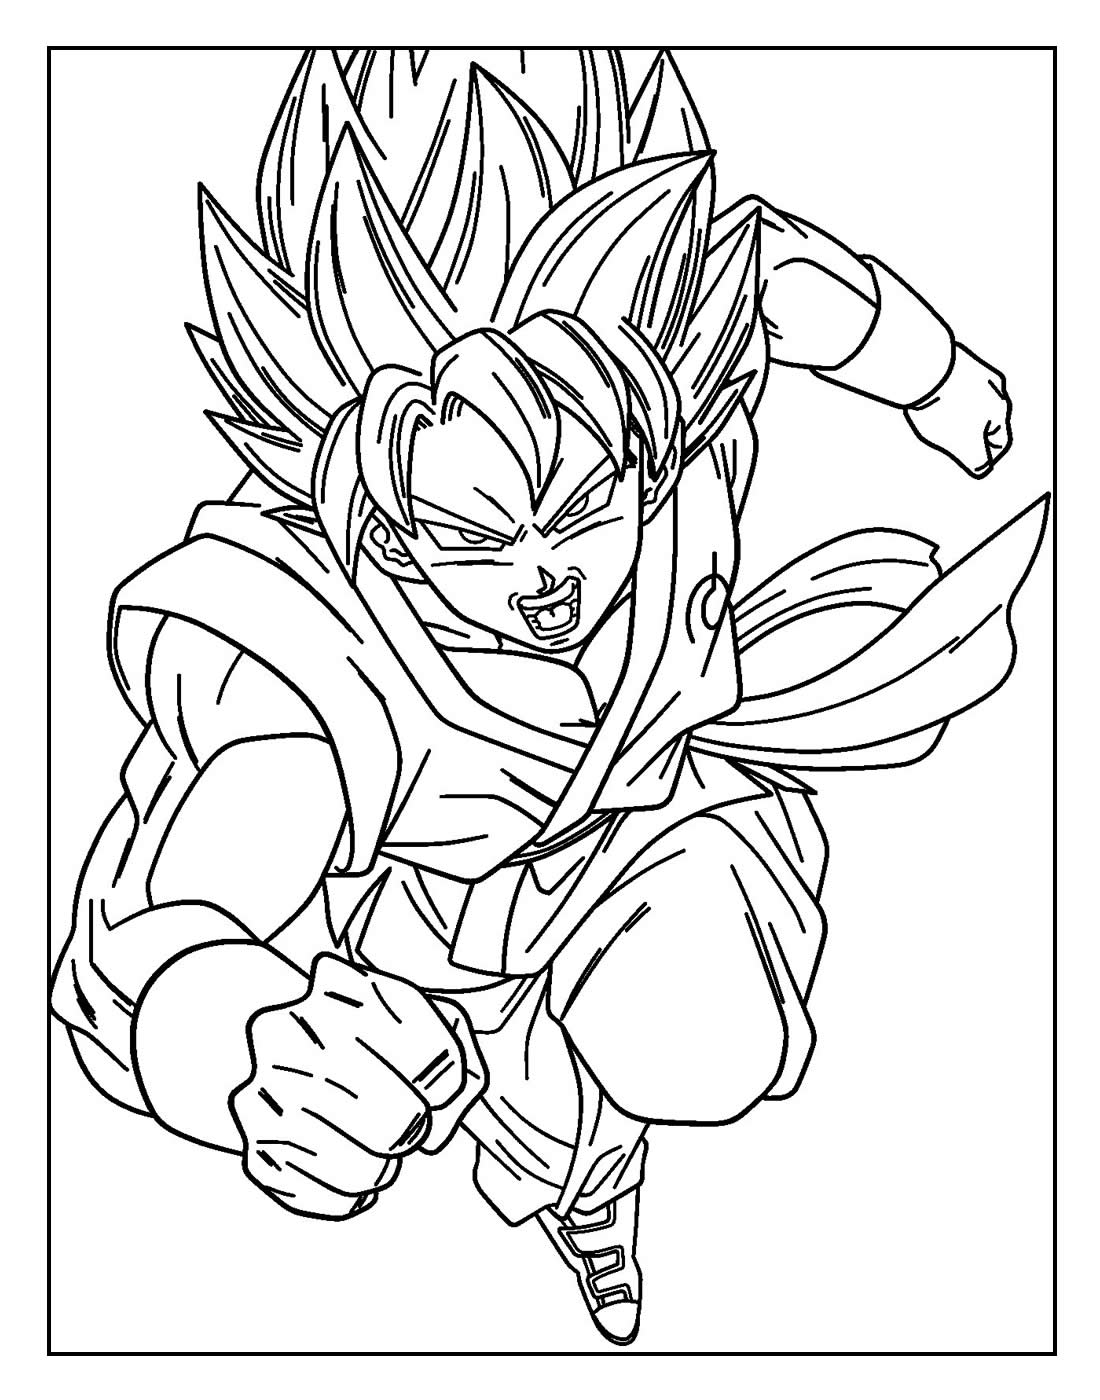 Página para pintar e colorir de Goku